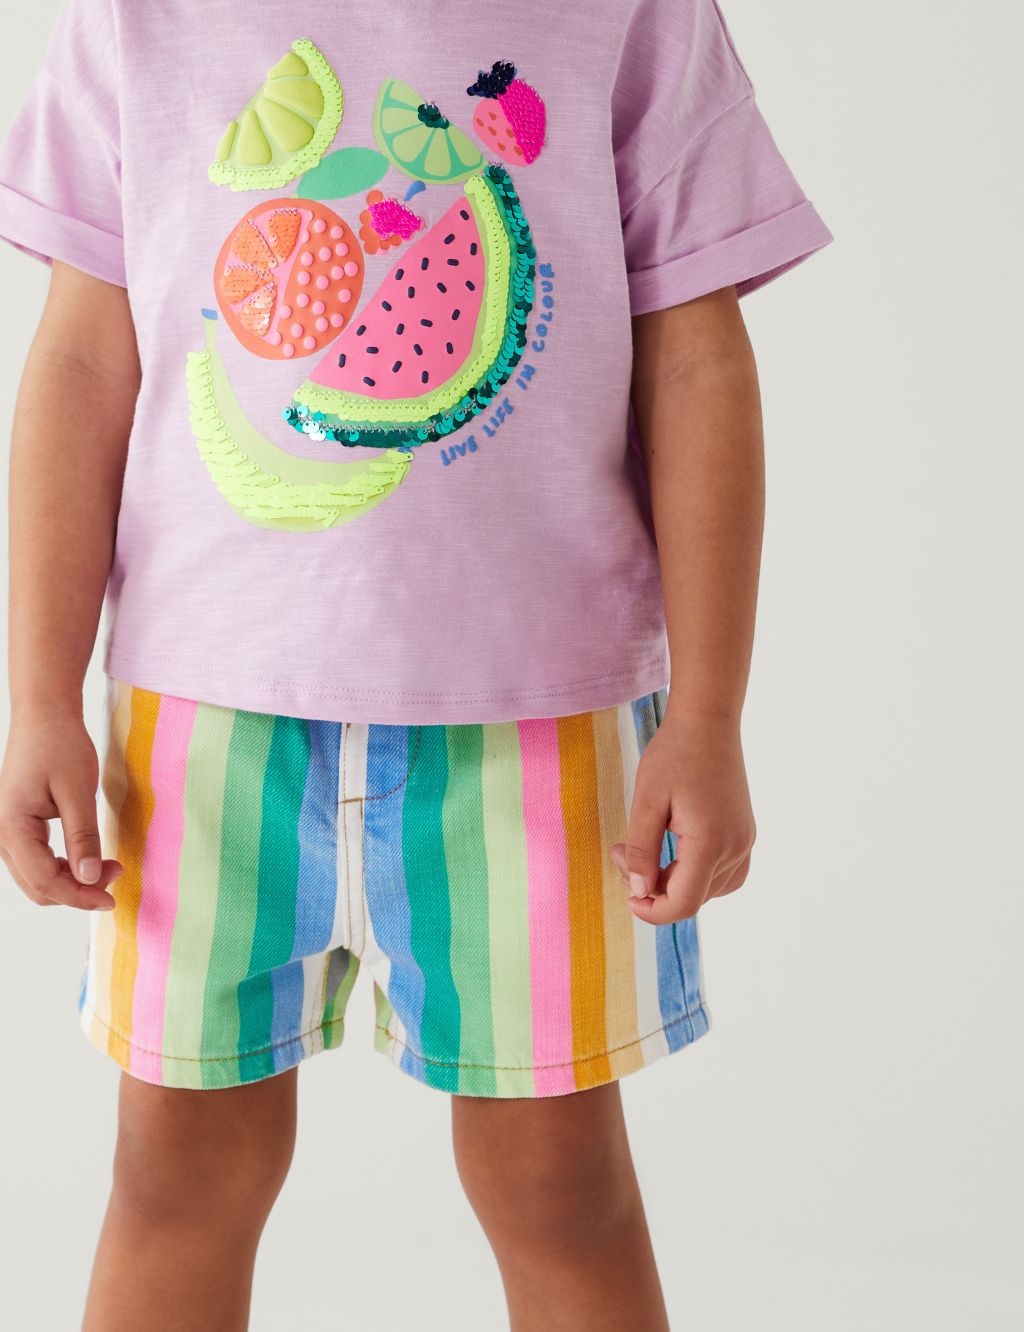 Denim Rainbow Striped Shorts (2-8 Yrs) image 2